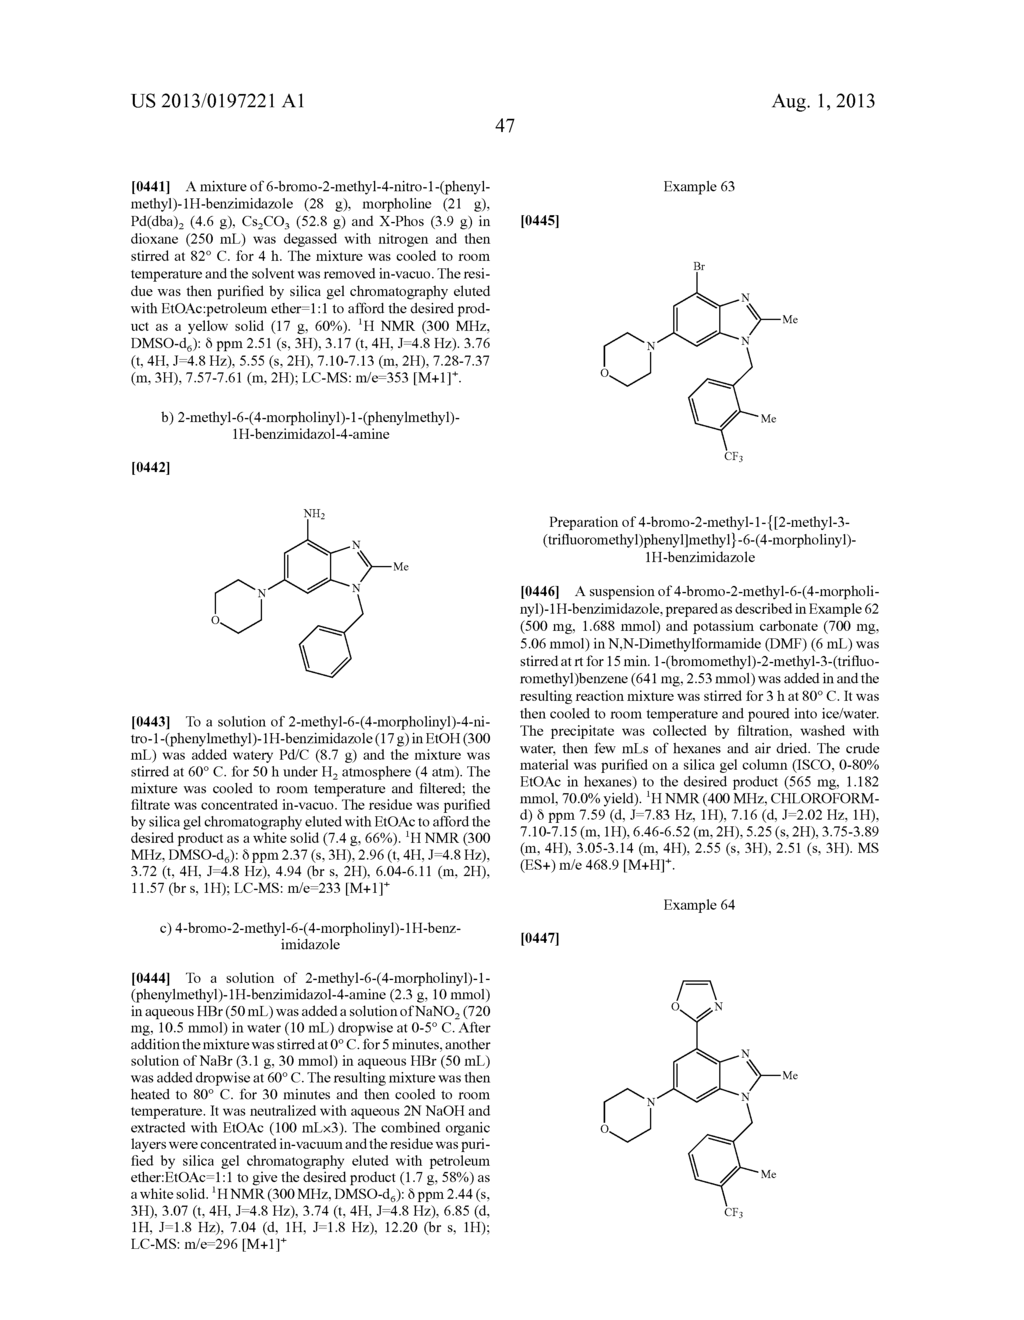 Benzimidazole Derivatives As PI3 Kinase Inhibitors - diagram, schematic, and image 48